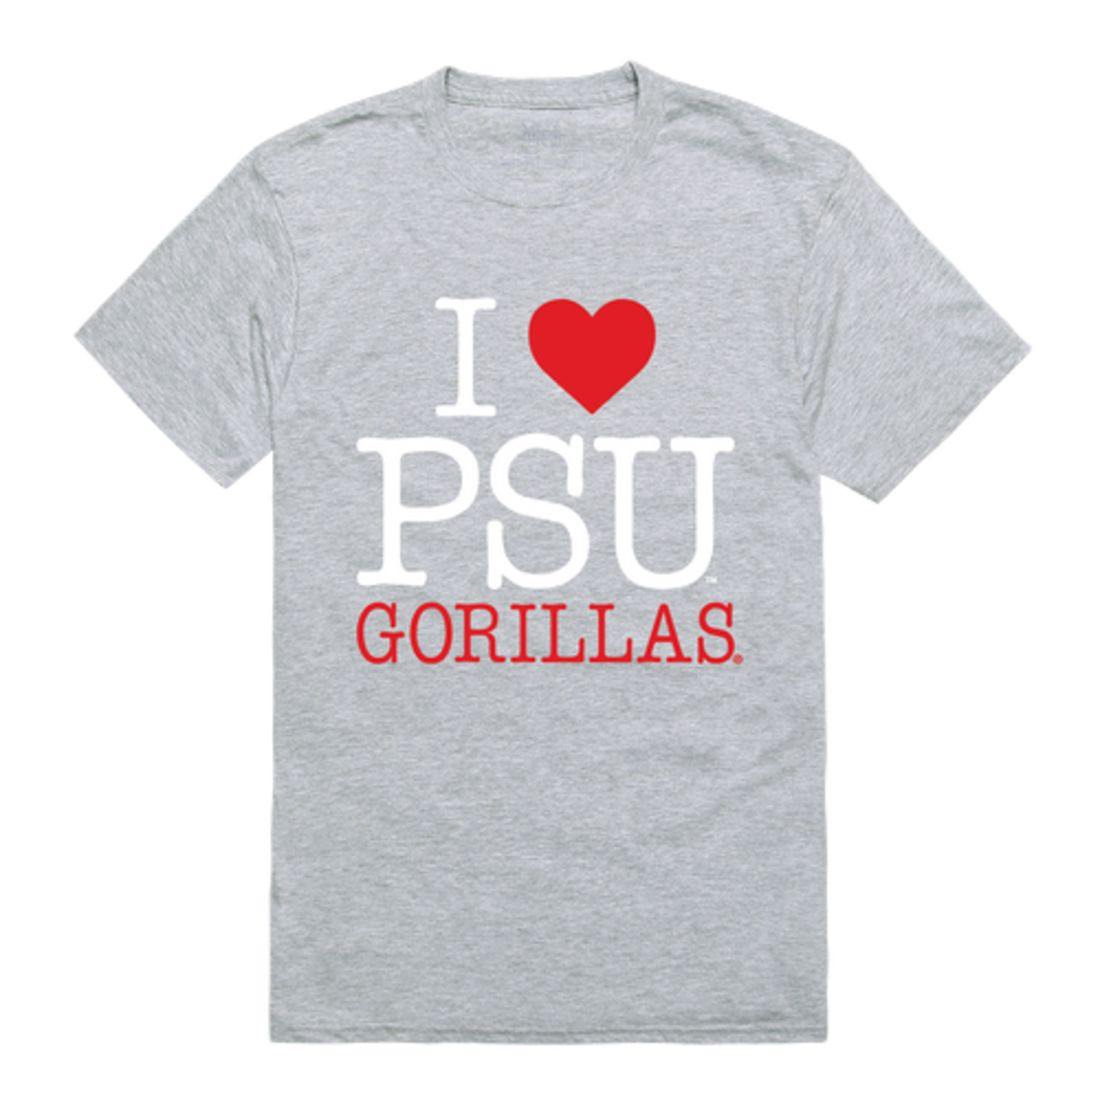 I Love Pittsburg State University Gorillas T-Shirt-Campus-Wardrobe